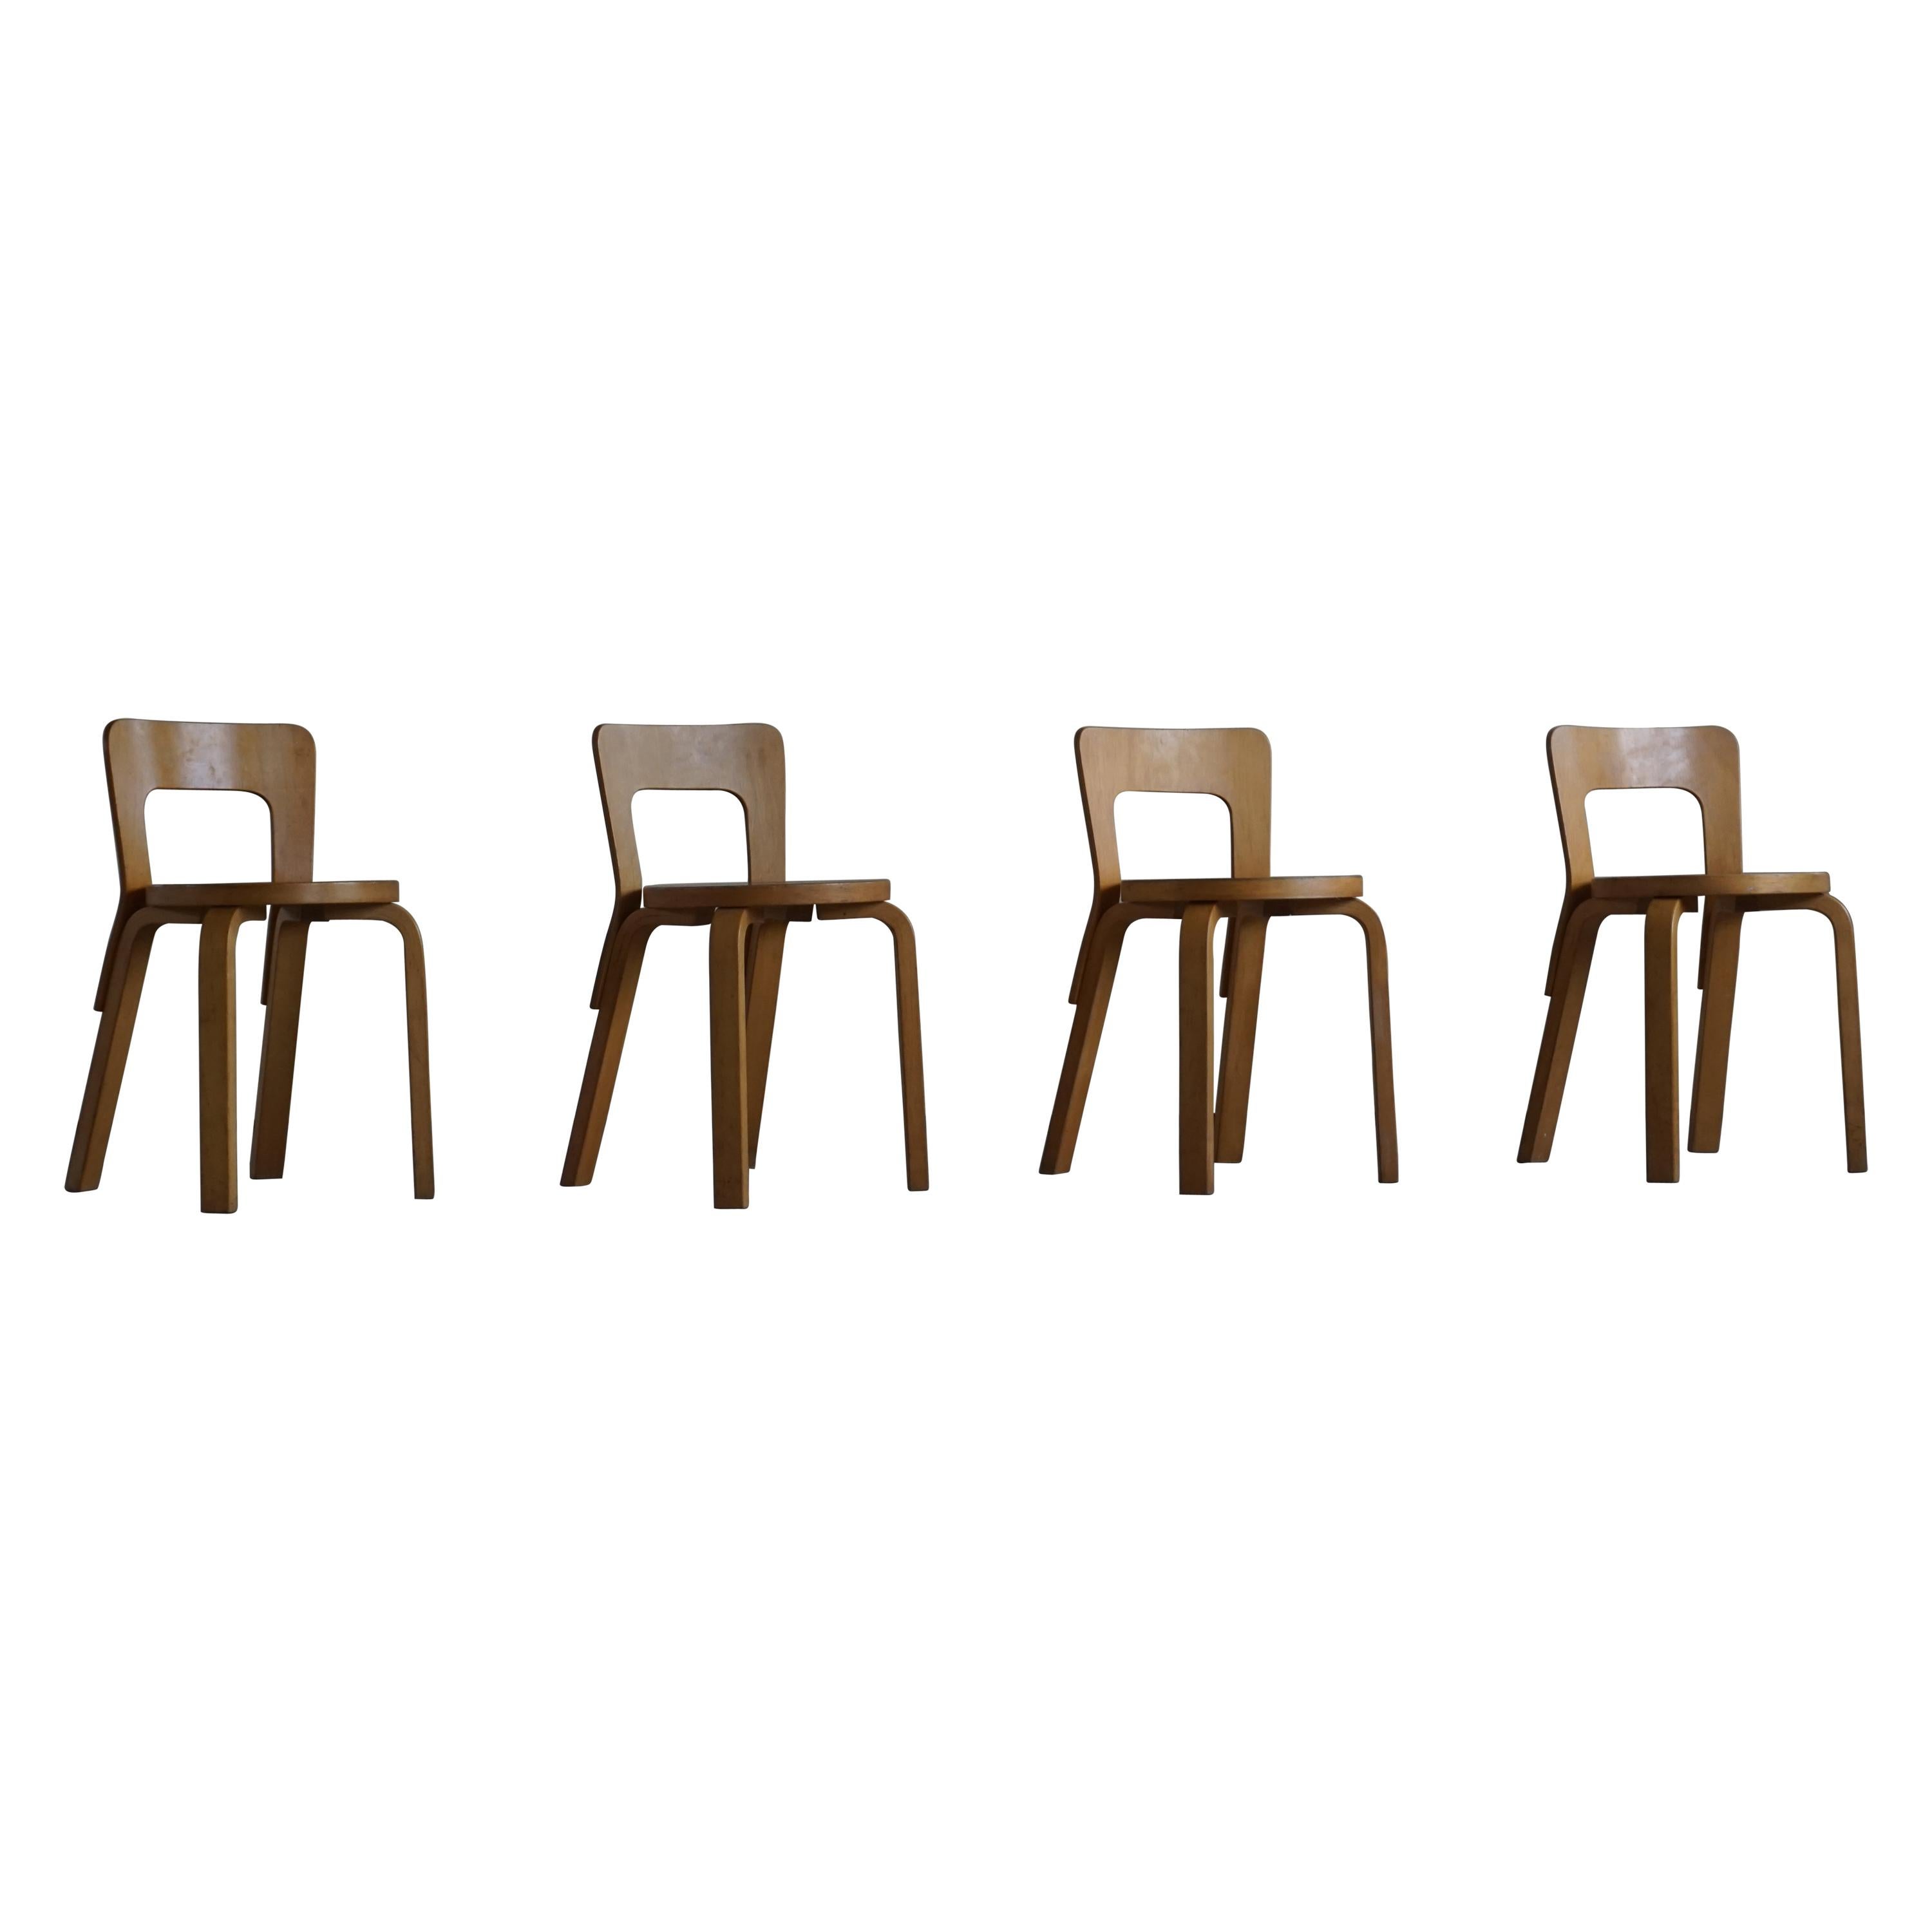 Early Mid-Century Modern Dining Chairs by Alvar Aalto for Artek, Model 65, 1950s